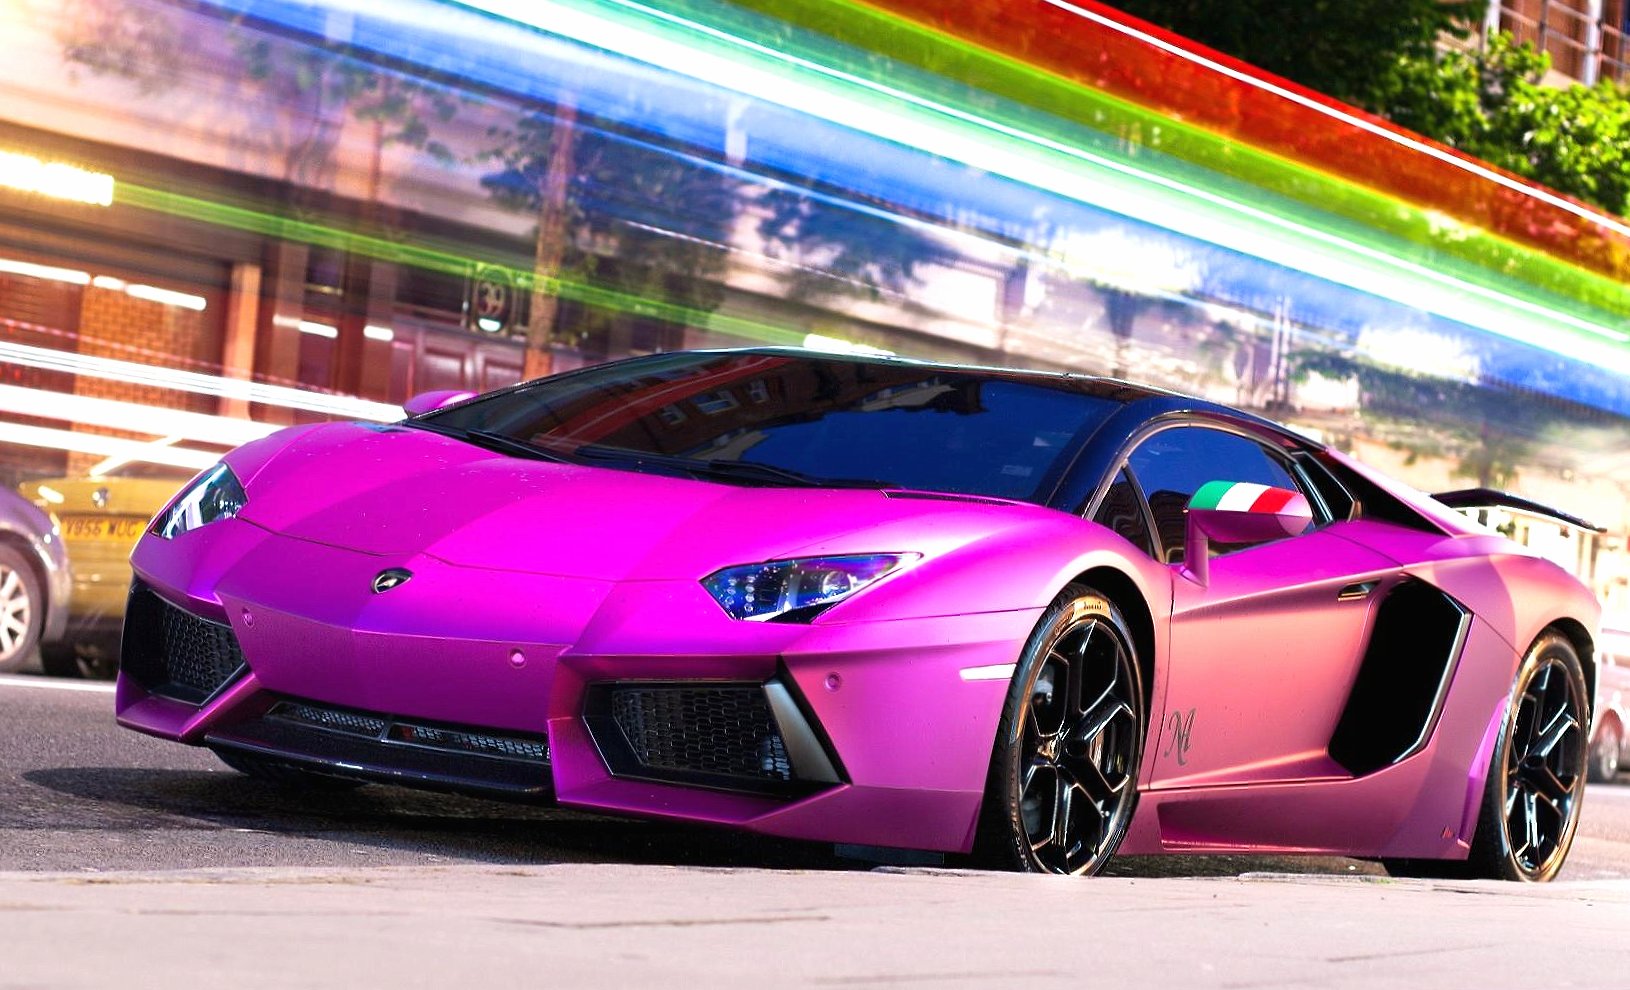 Lamborghini aventador pink at 1024 x 1024 iPad size wallpapers HD quality